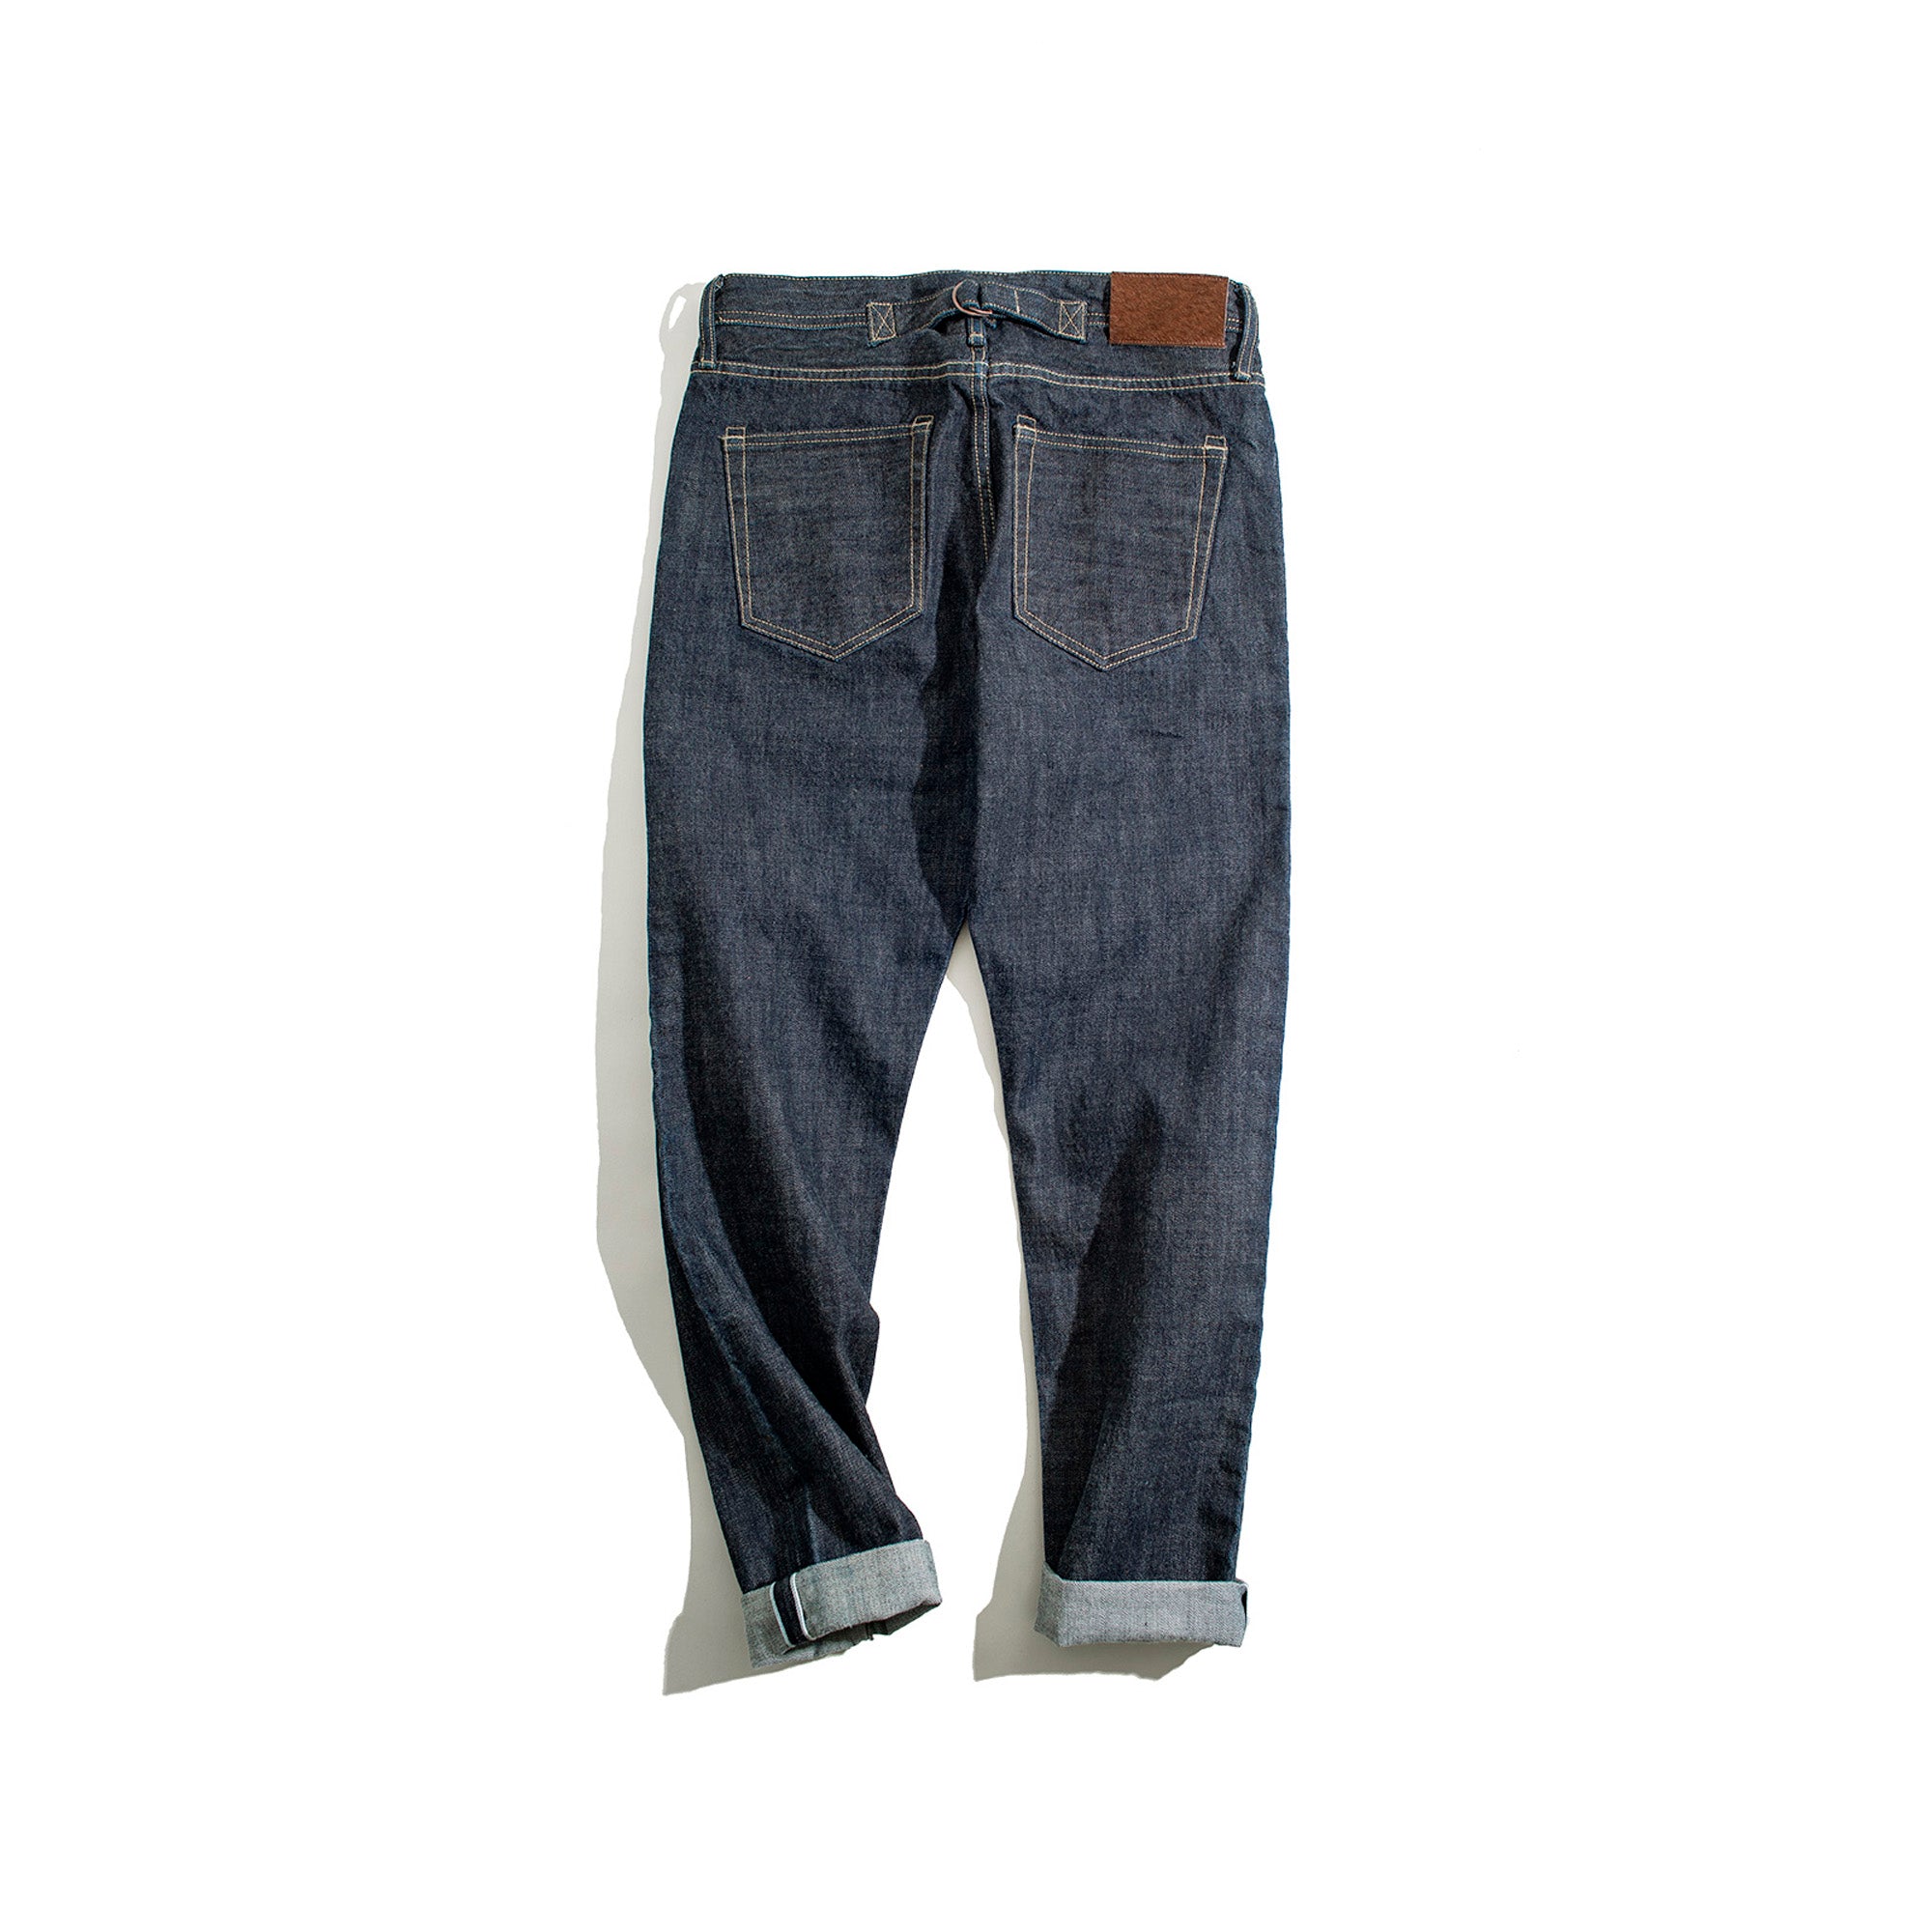 American heavyweight Denim jeans